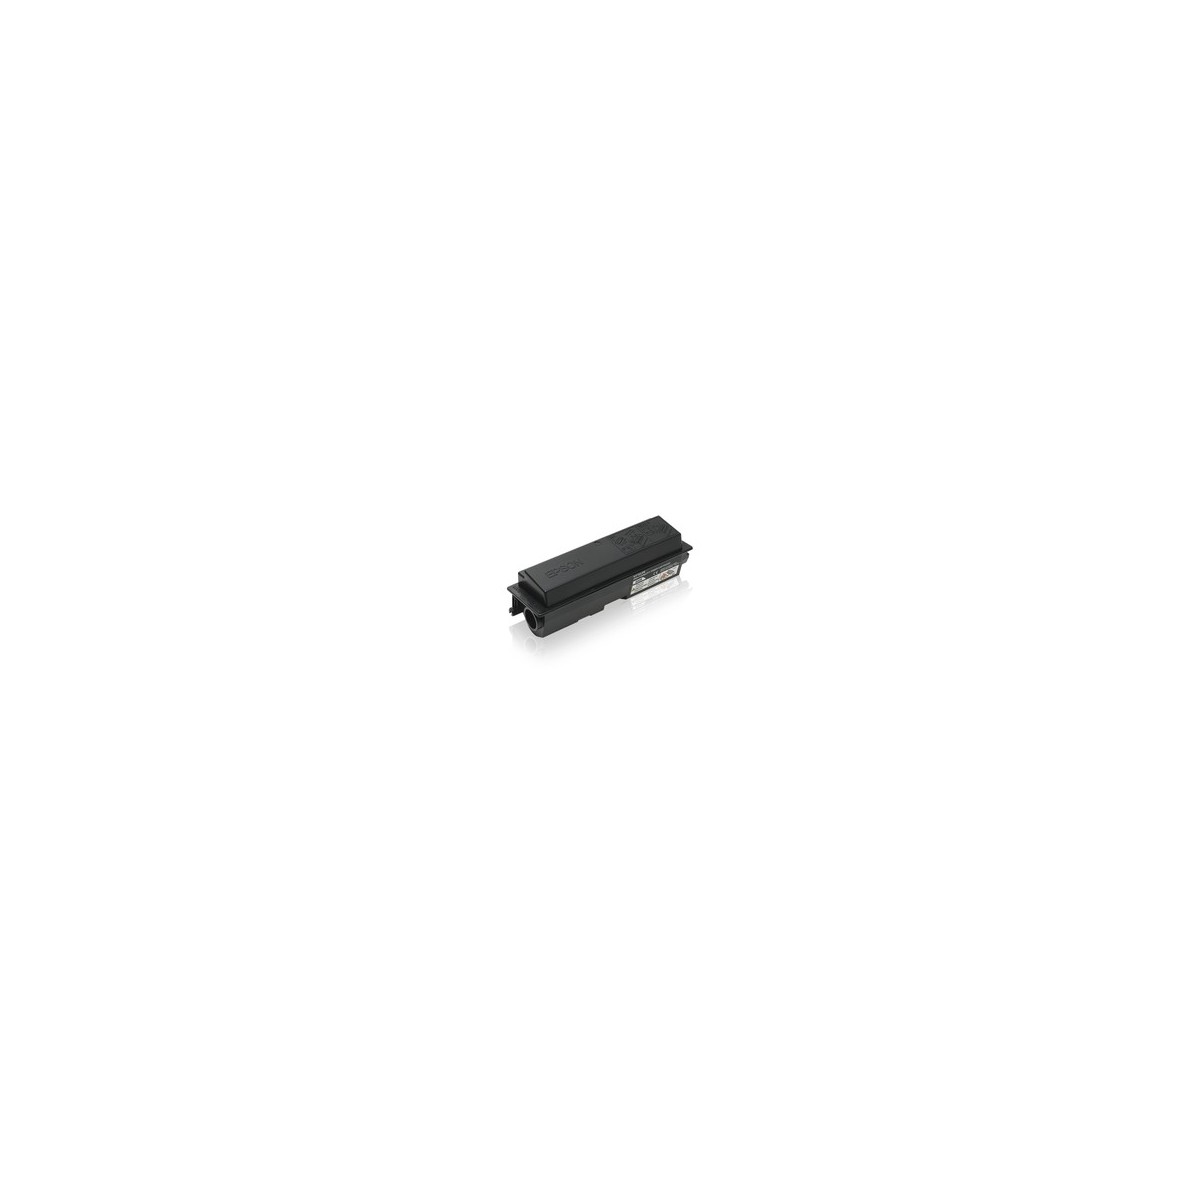 Epson High Capacity Toner Cartridge 8k - 8000 pages - Black - 1 pc(s)